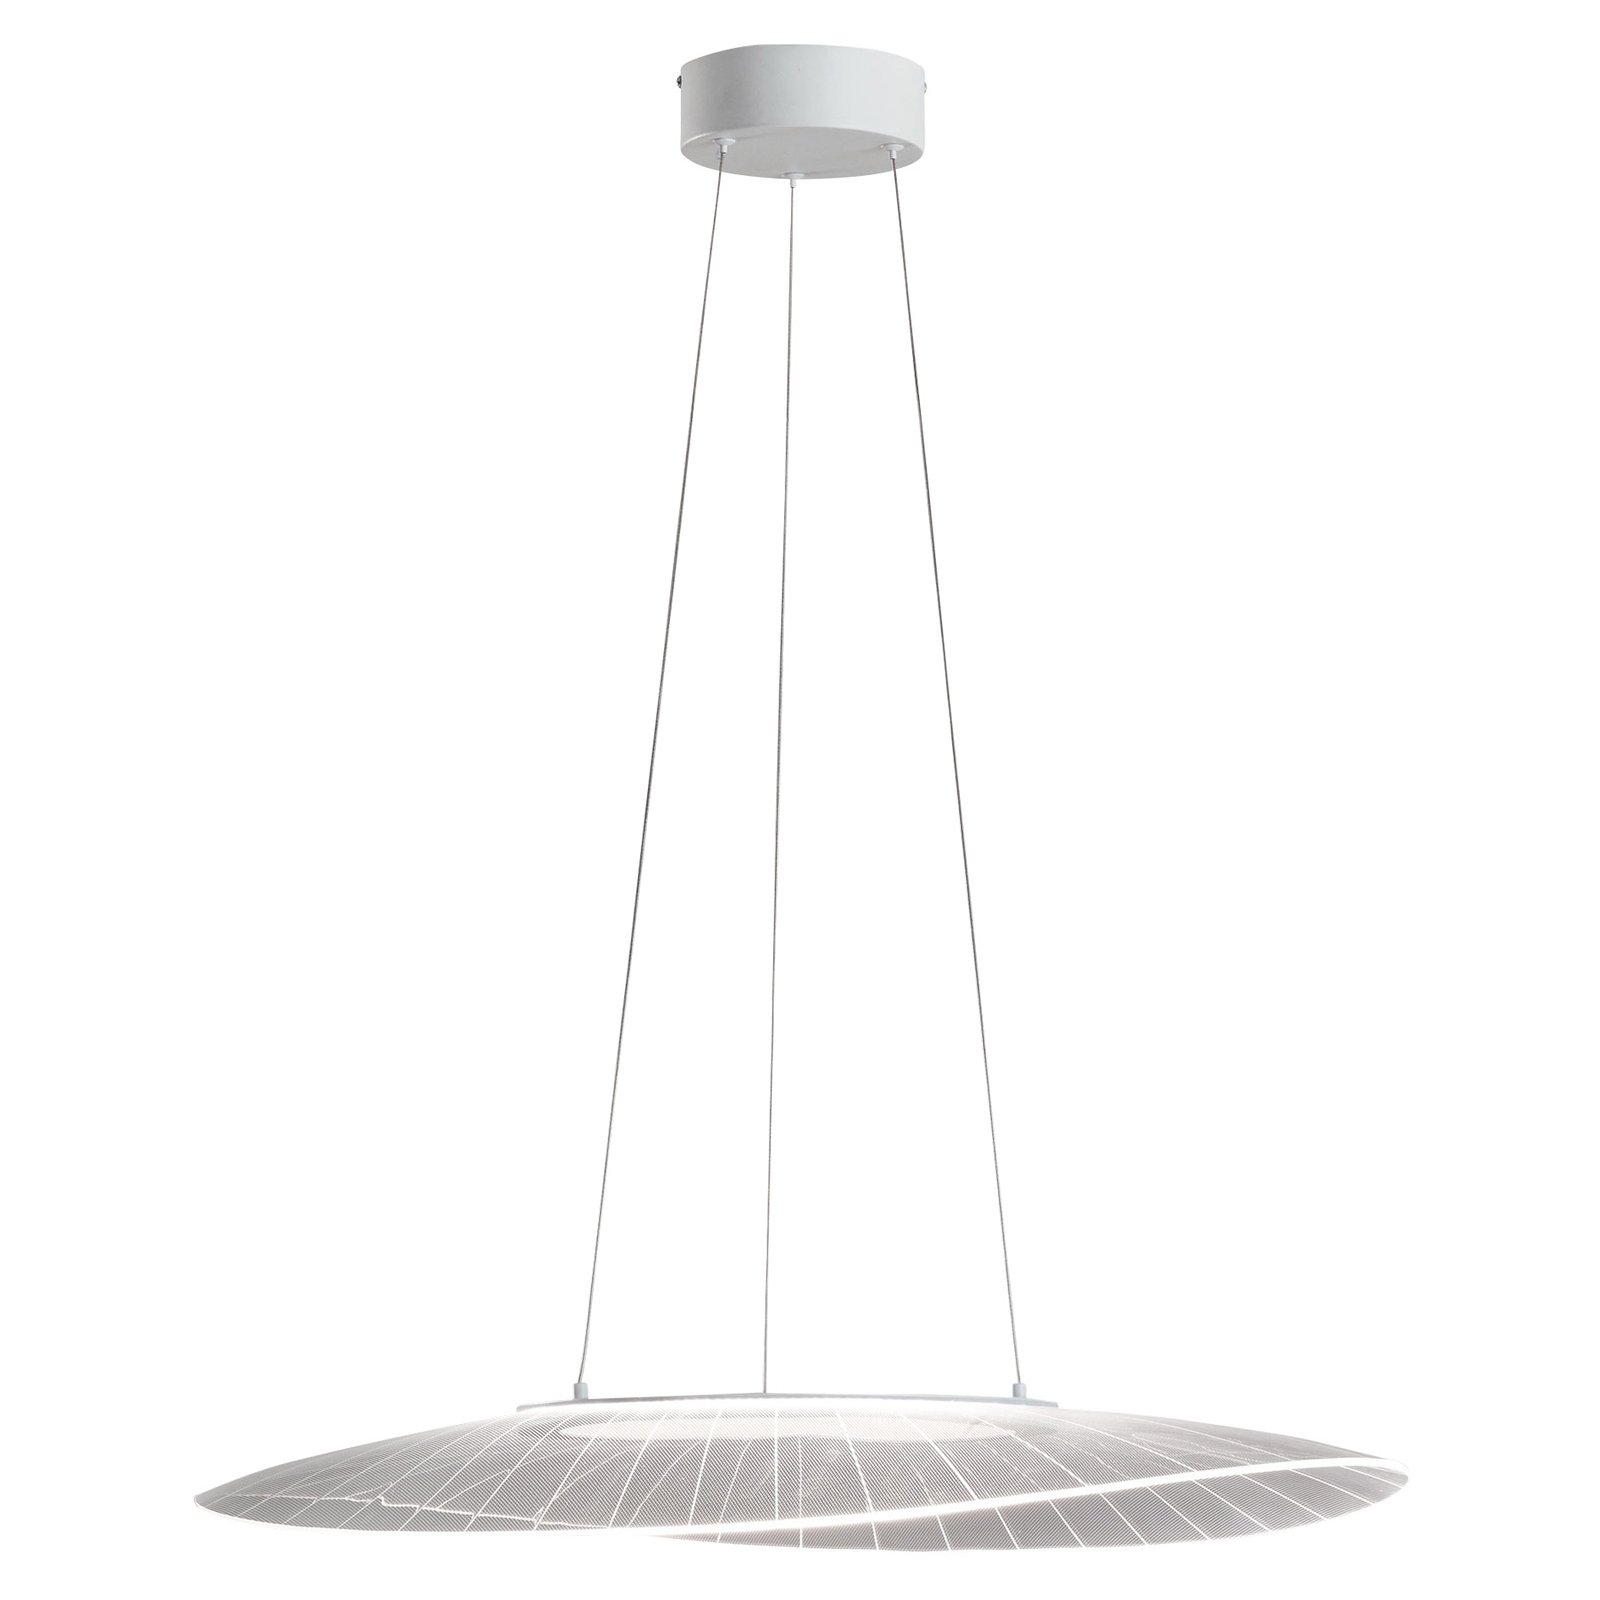 Závesné svietidlo LED Vela, biele, oválne, 78 cm x 55 cm